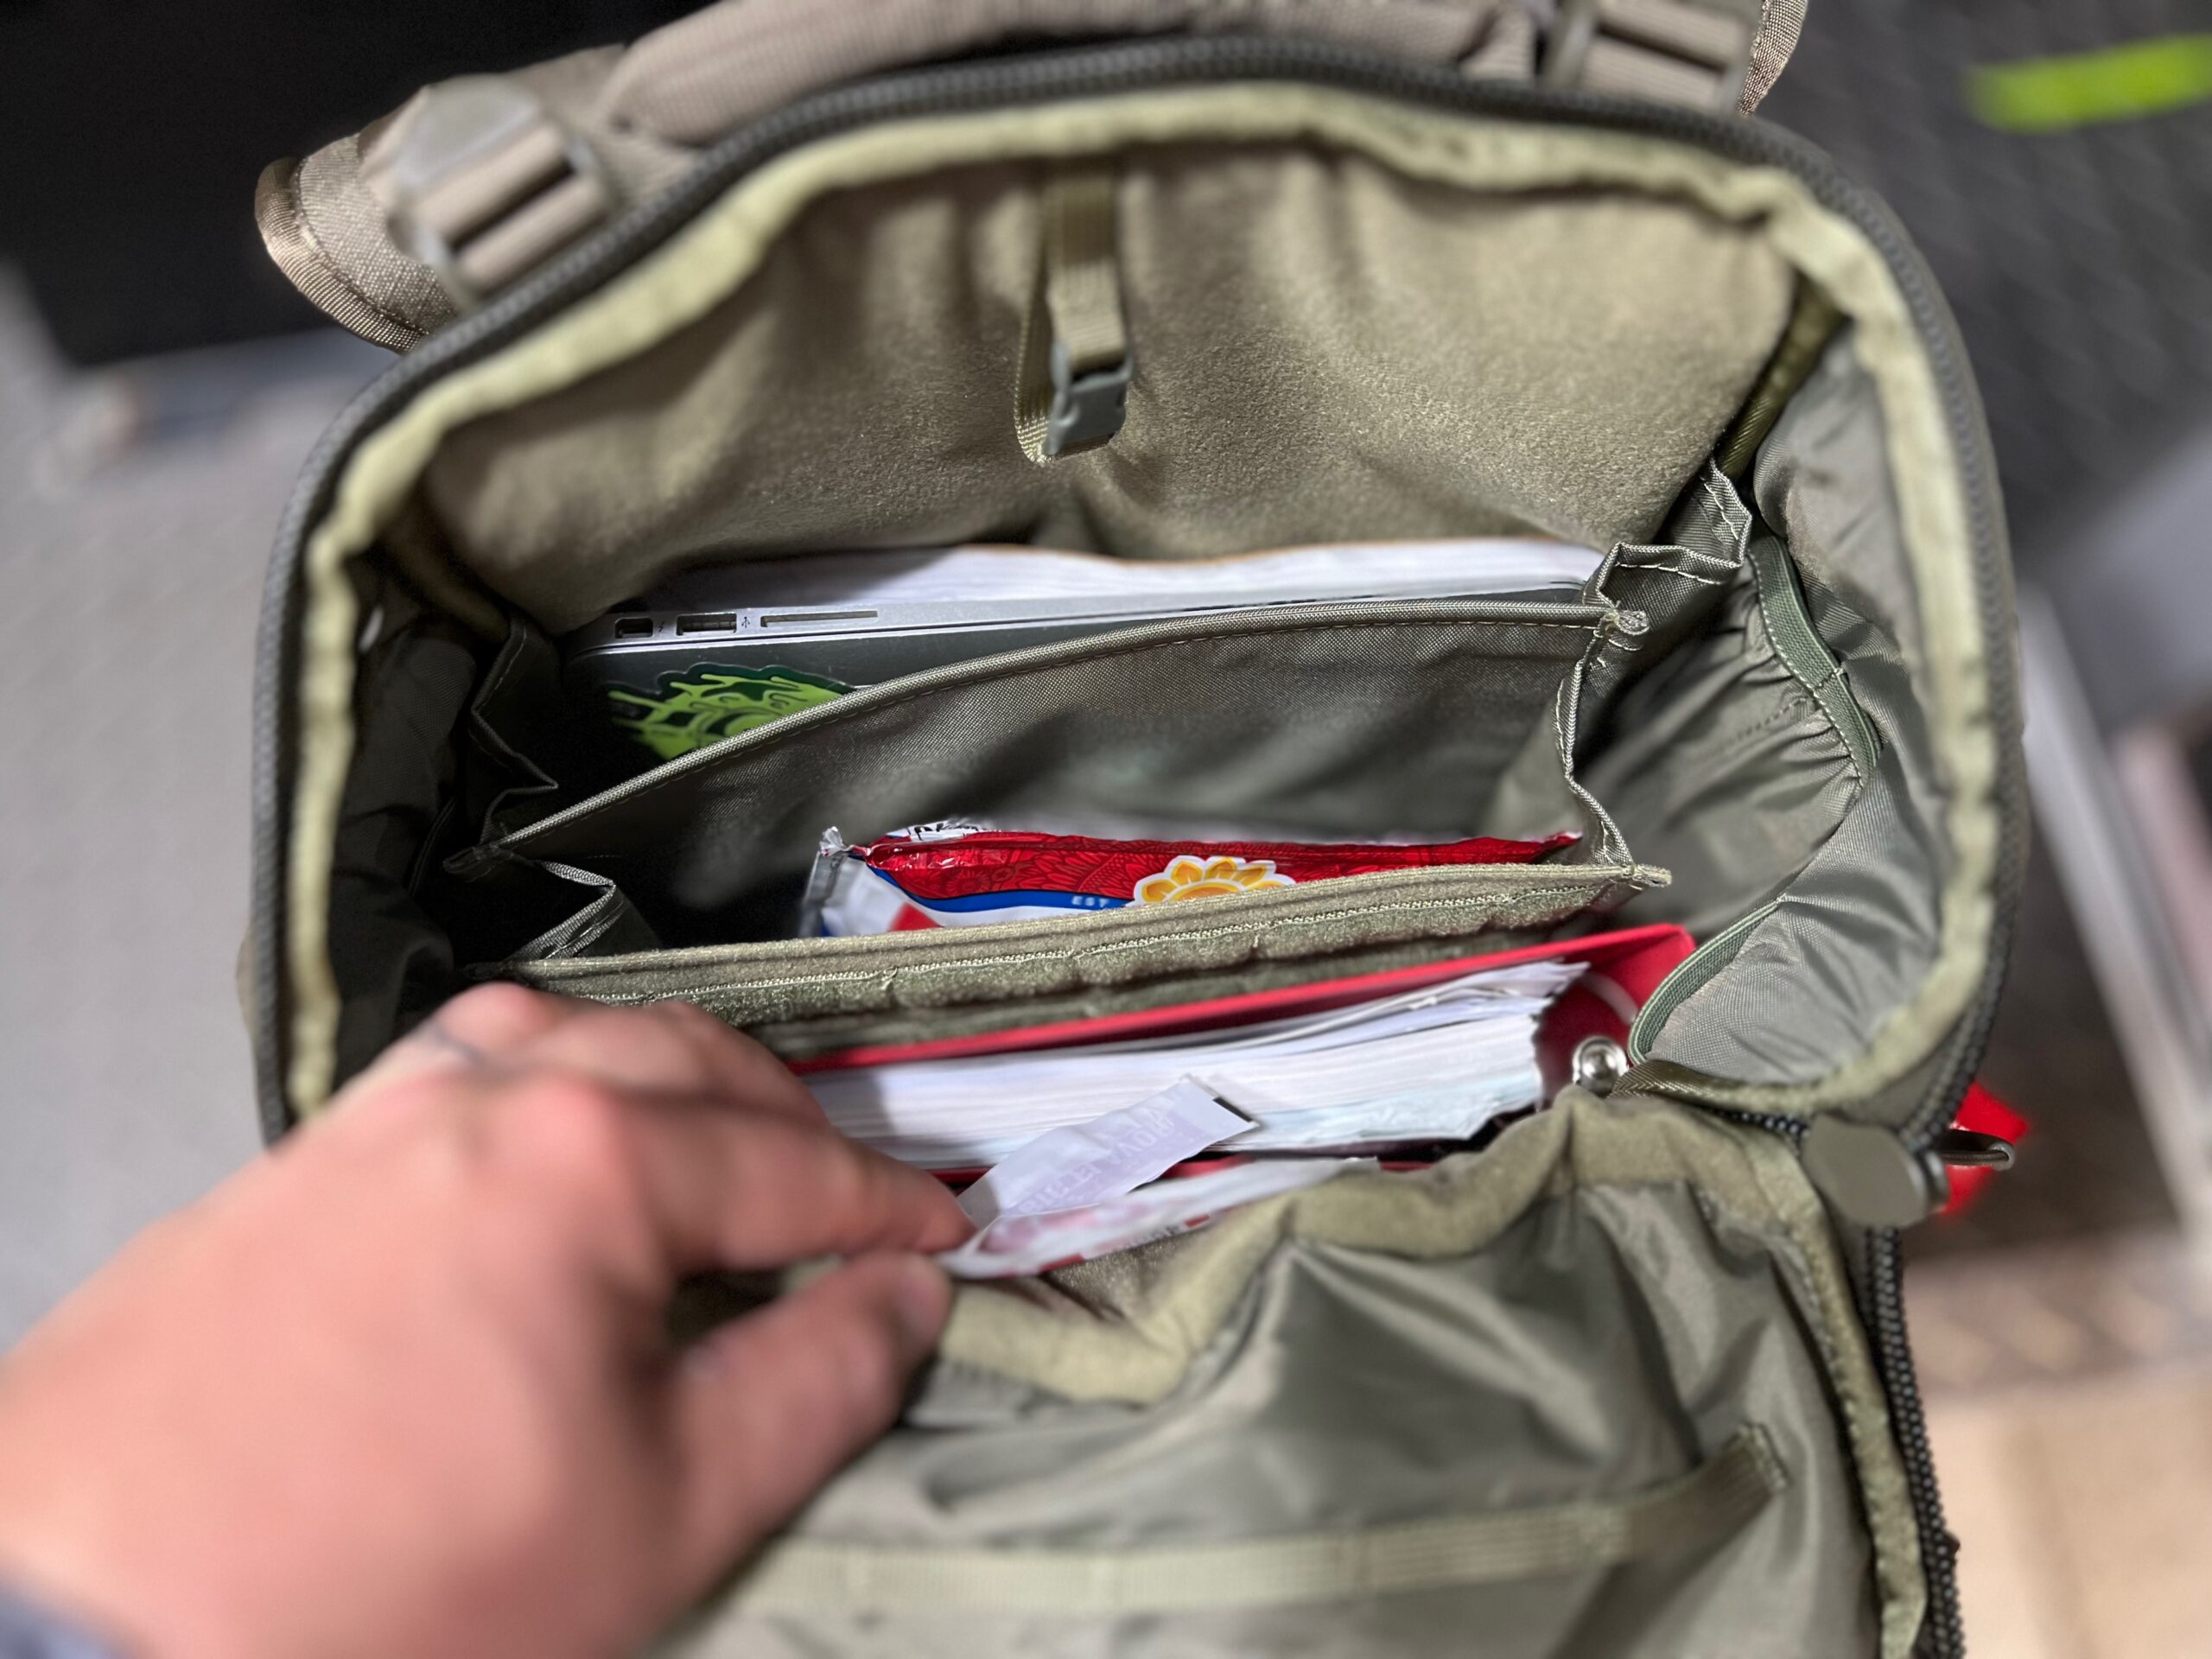 Any good edc backpack should have plenty of organization